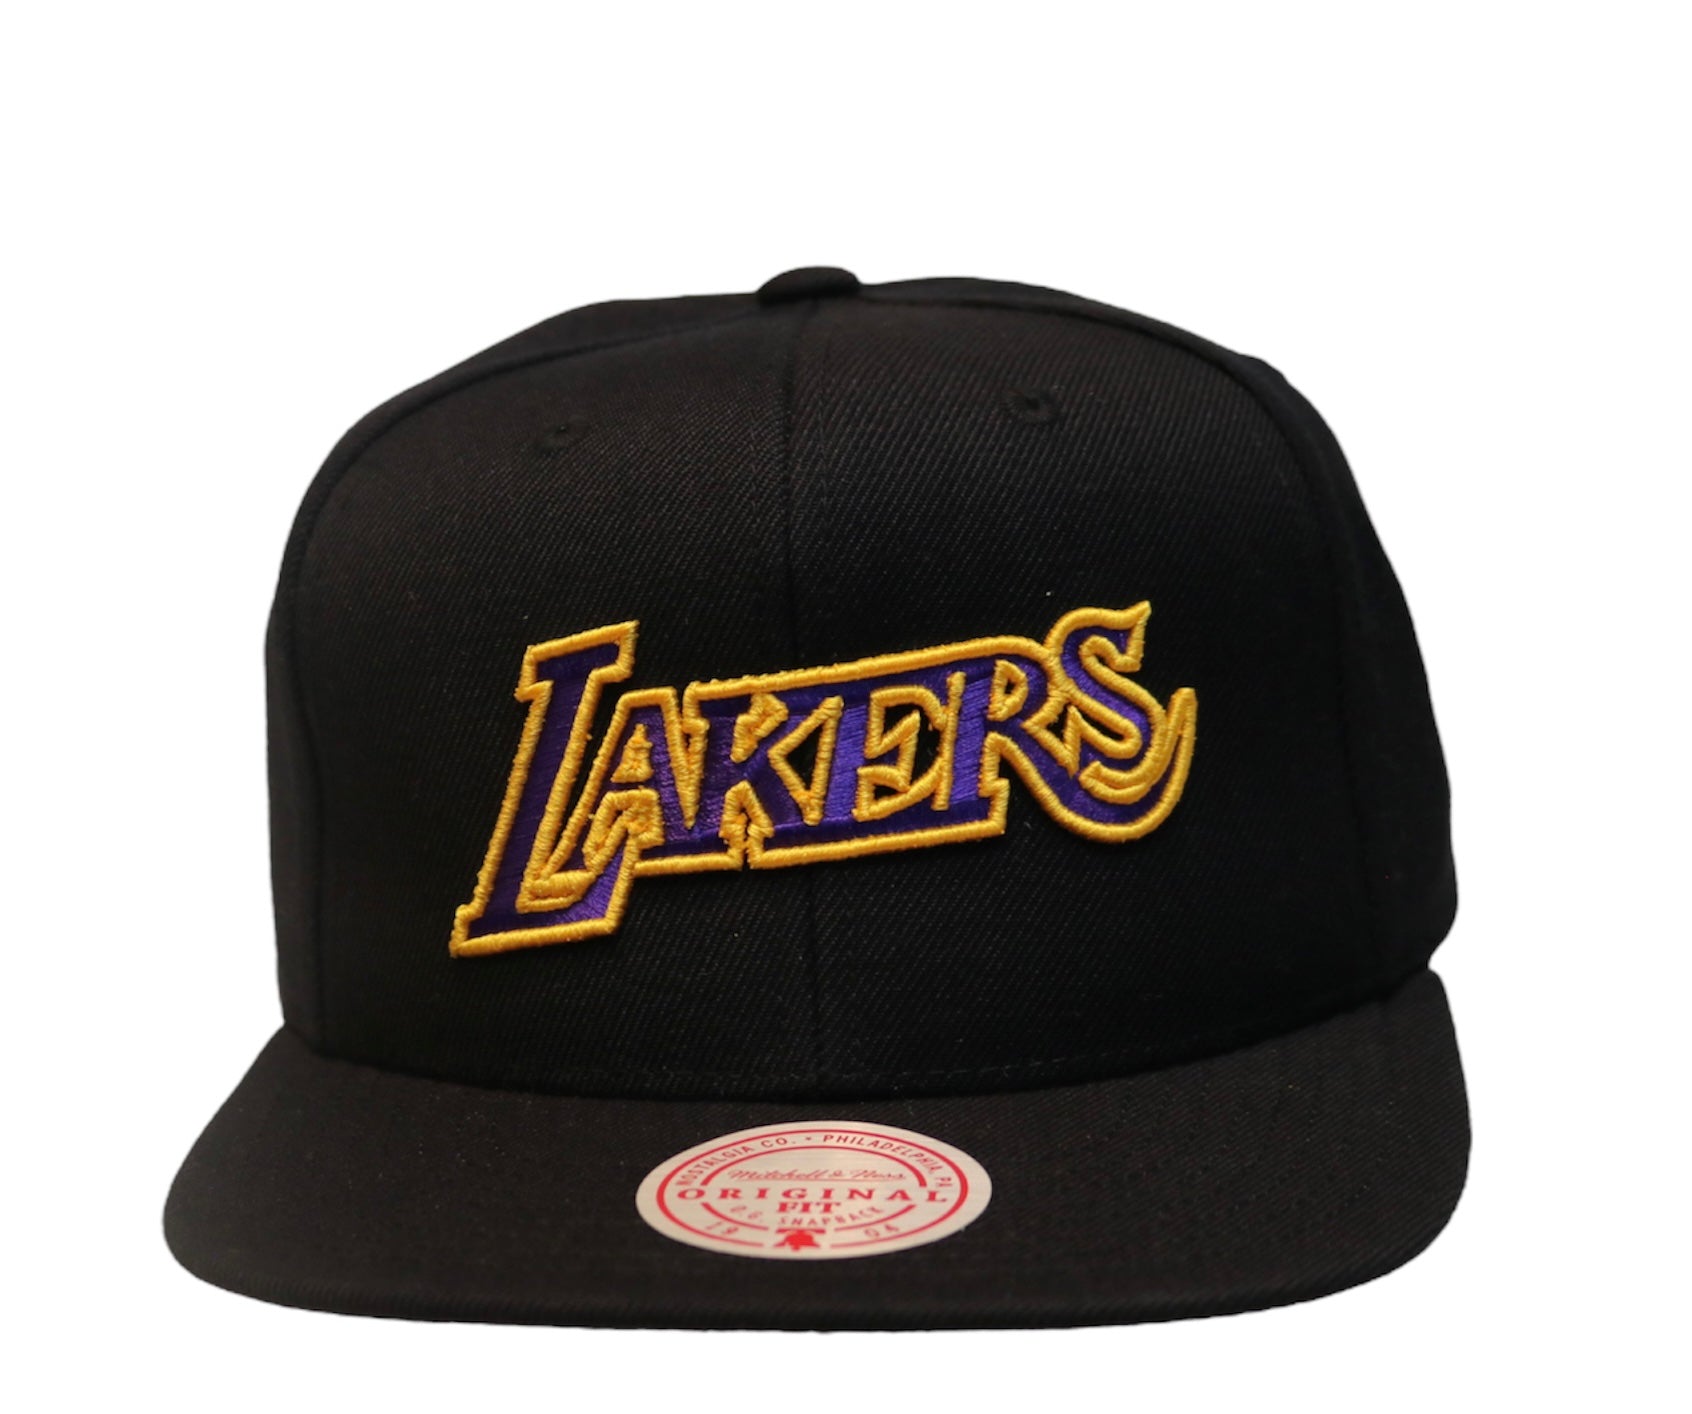 Los Angeles Lakers Purple Script Mitchell & Ness Snapback Hat